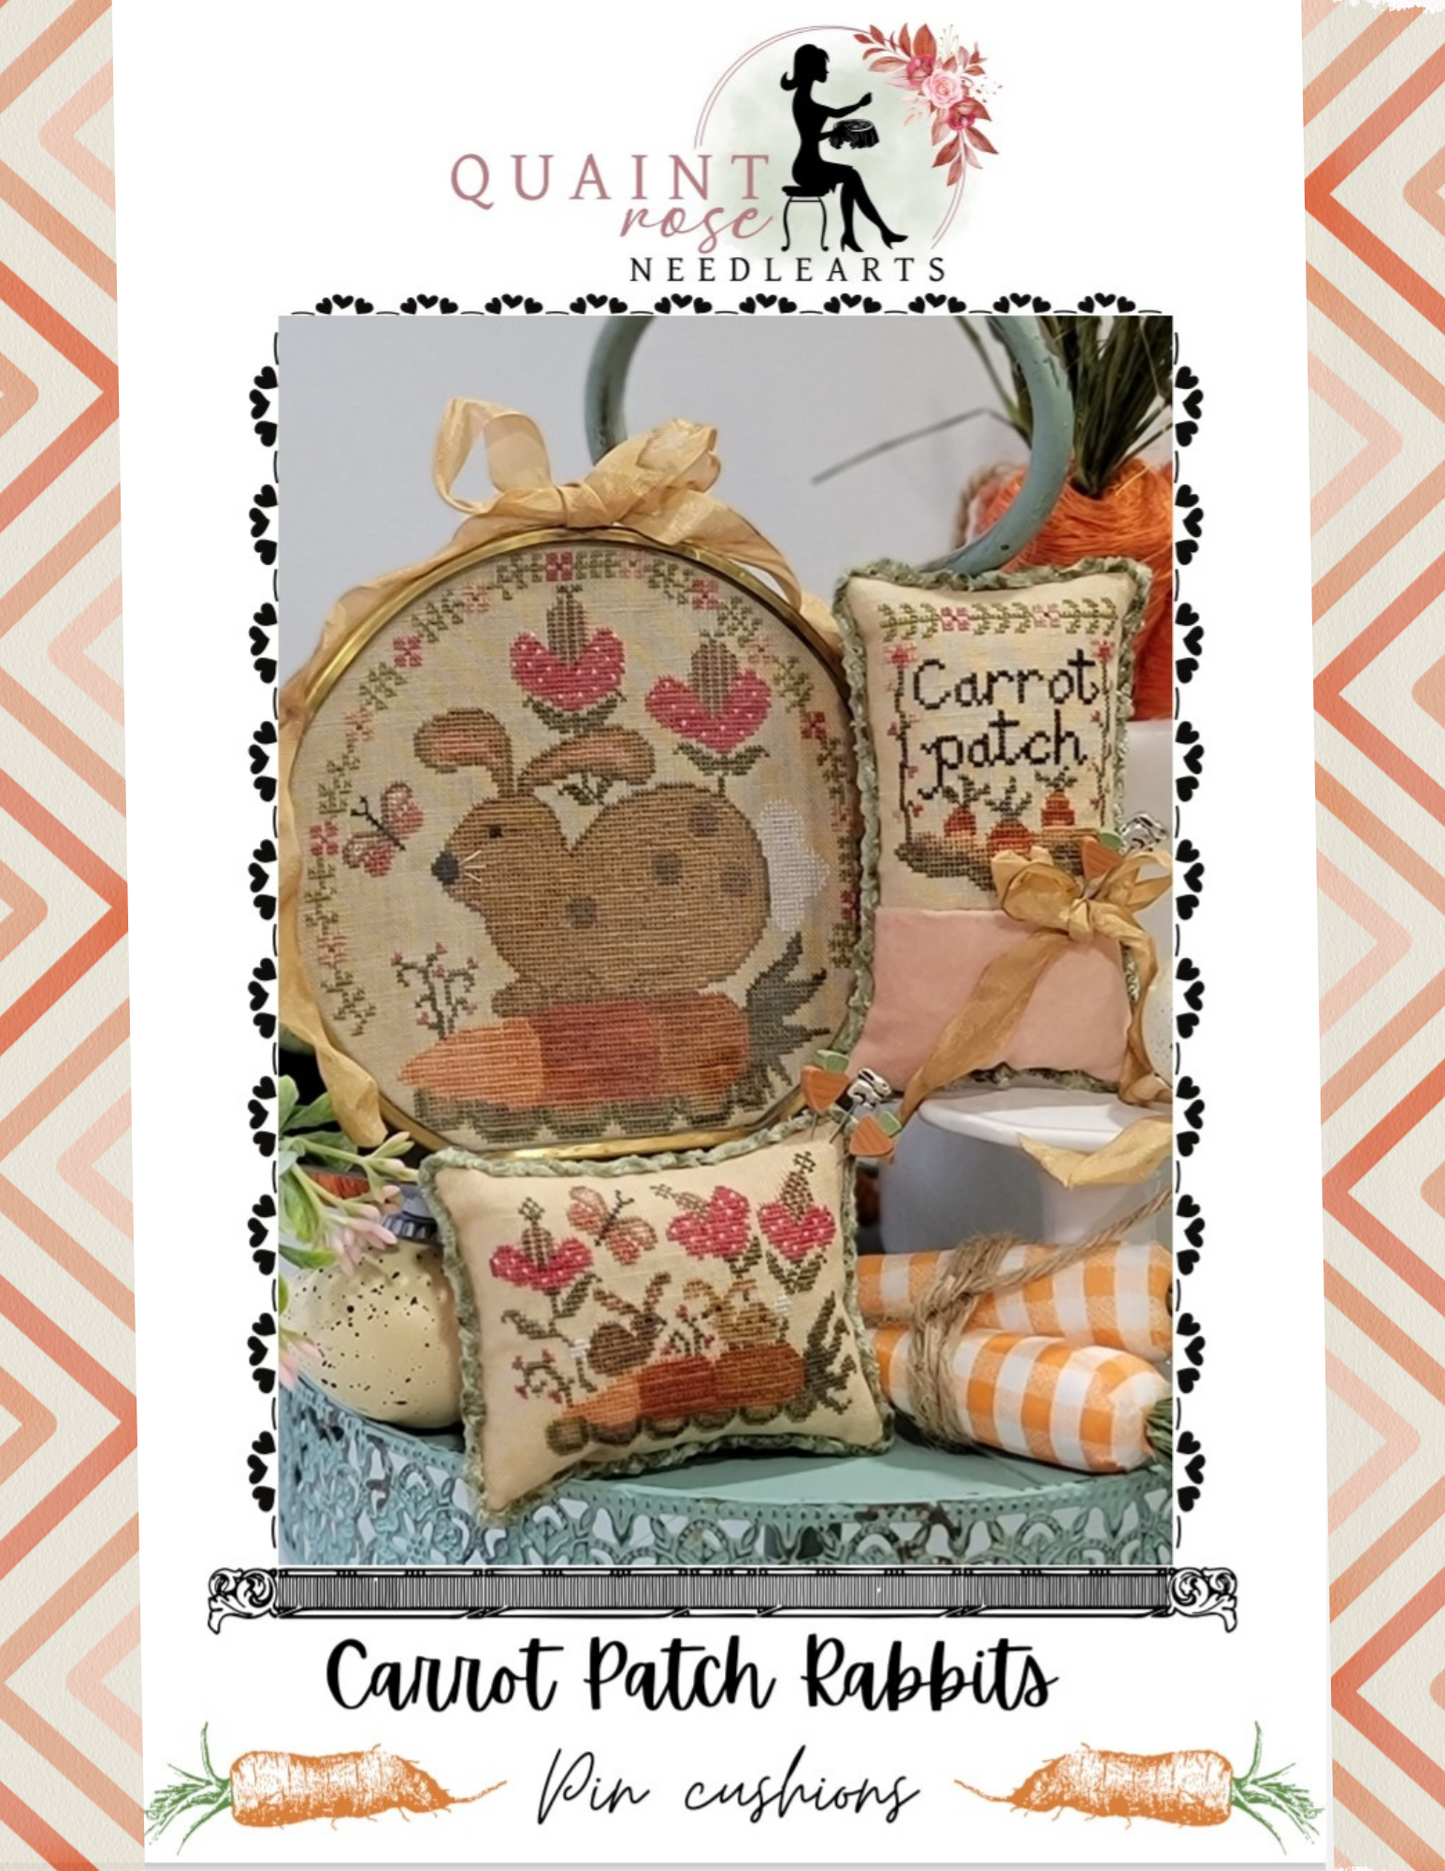 Carrot Patch Rabbits - Quaint Rose NeedleArts - Cross Stitch Patterns, Needlecraft Patterns, The Crafty Grimalkin - A Cross Stitch Store